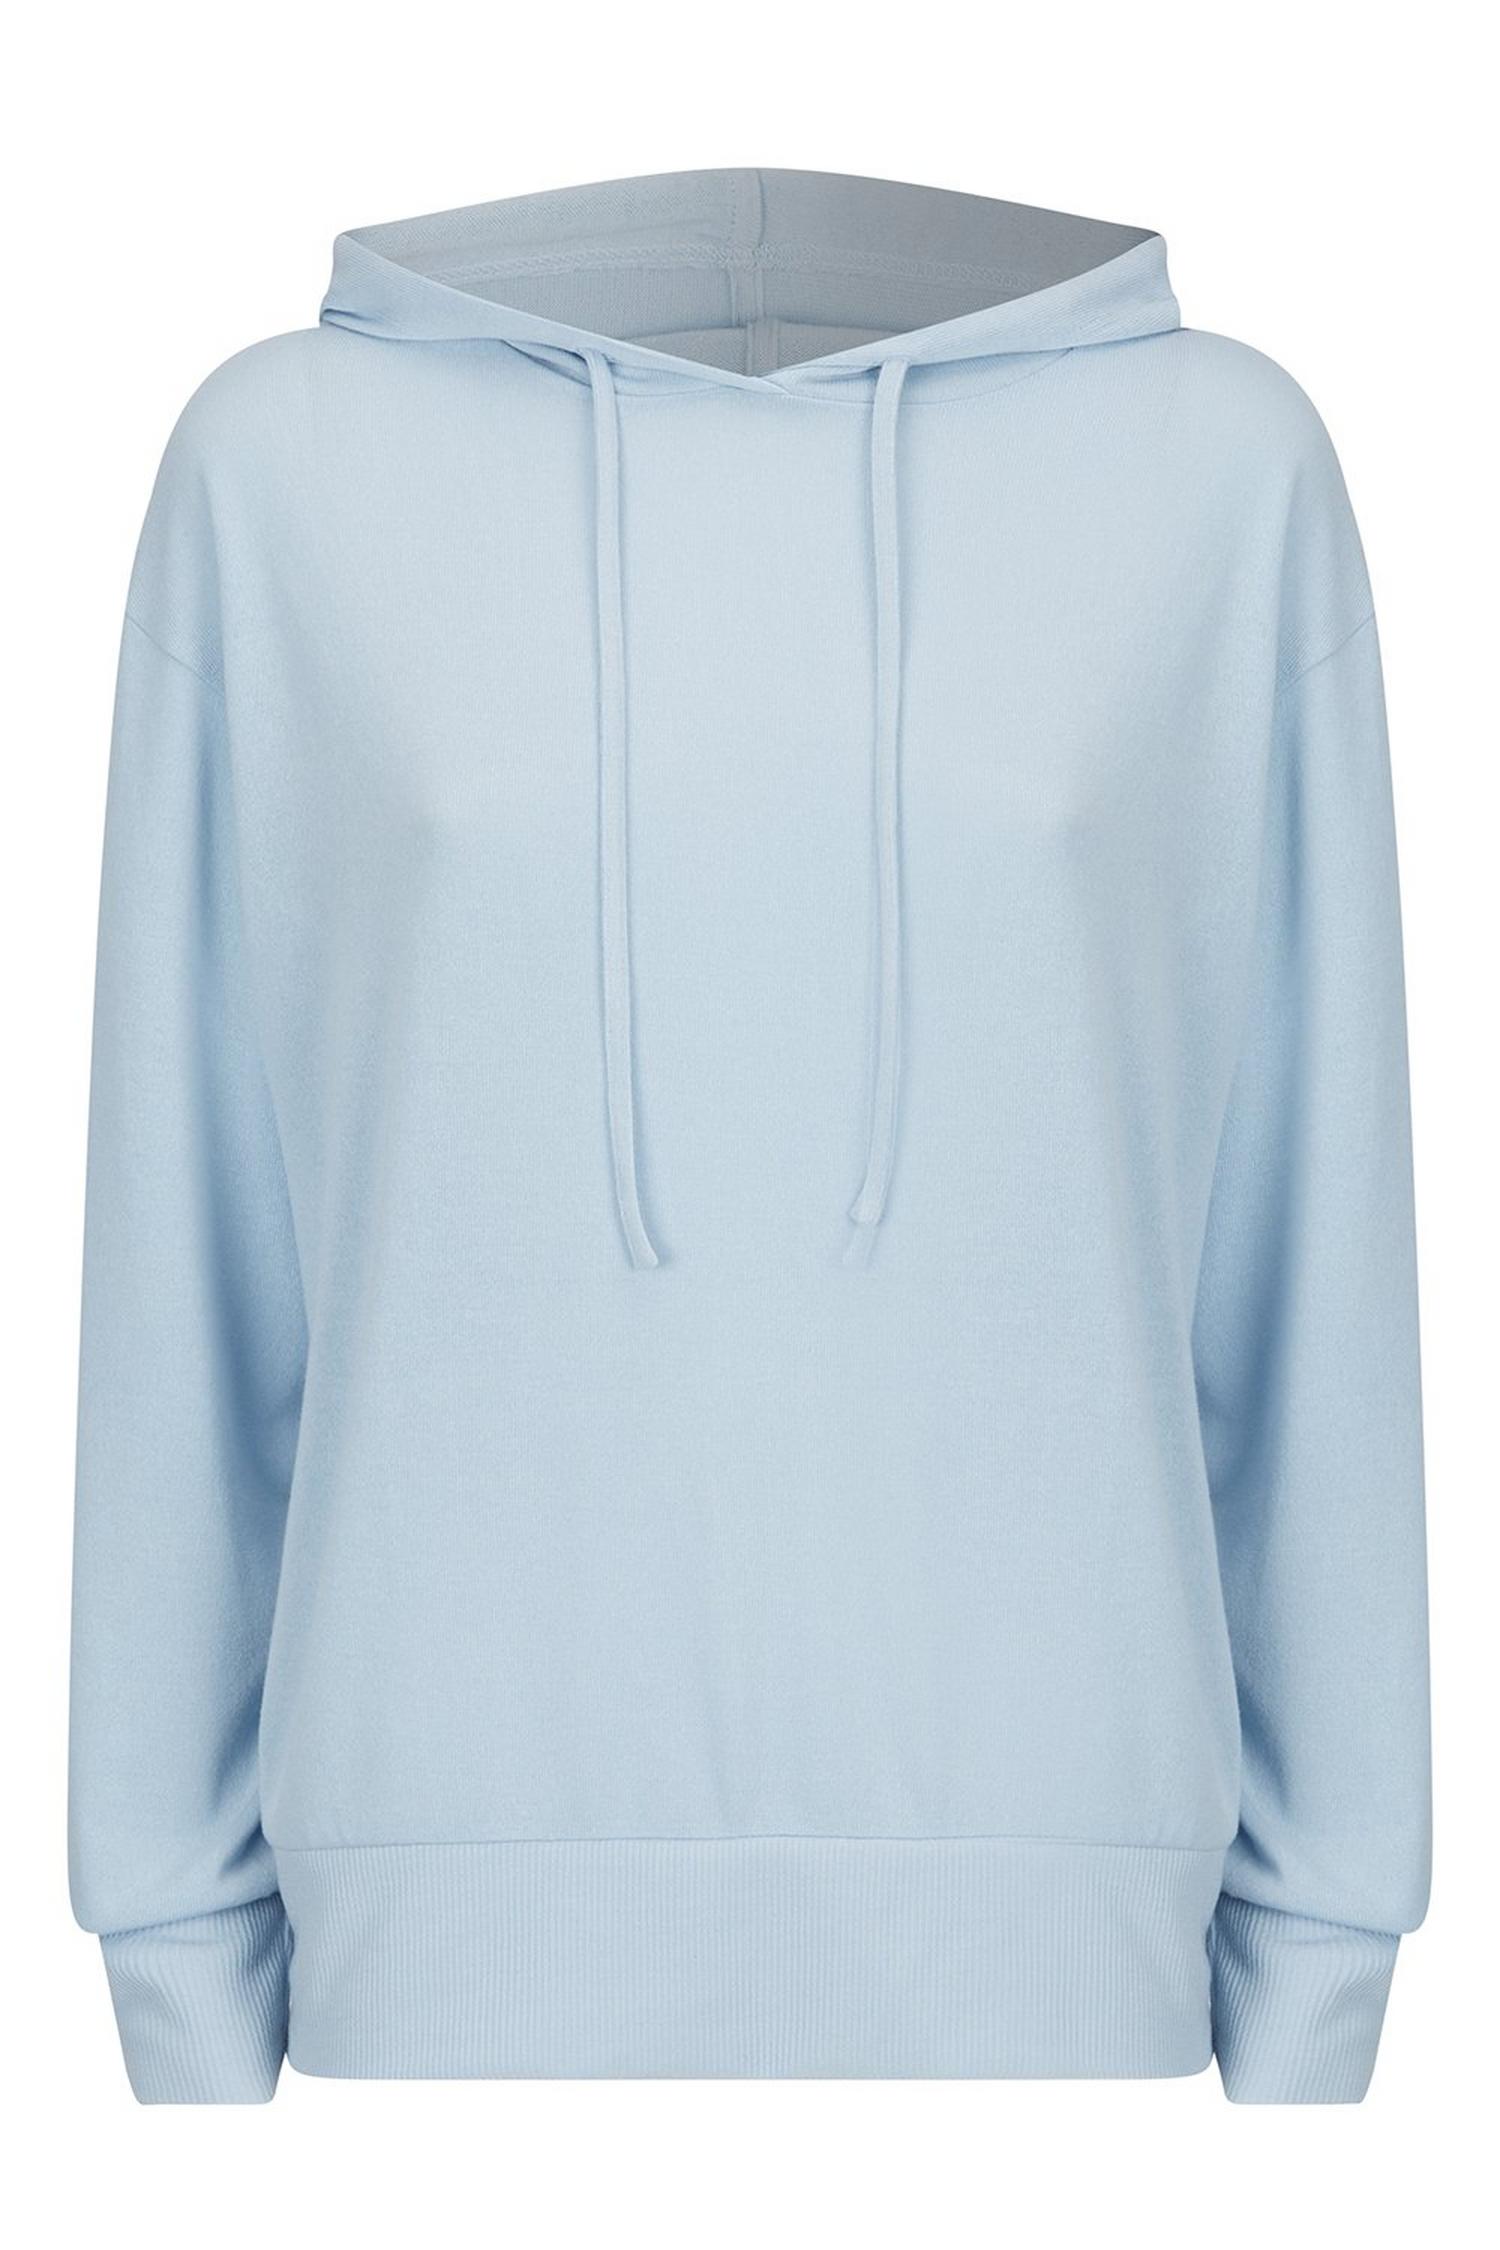 Plain blue sweatshirt